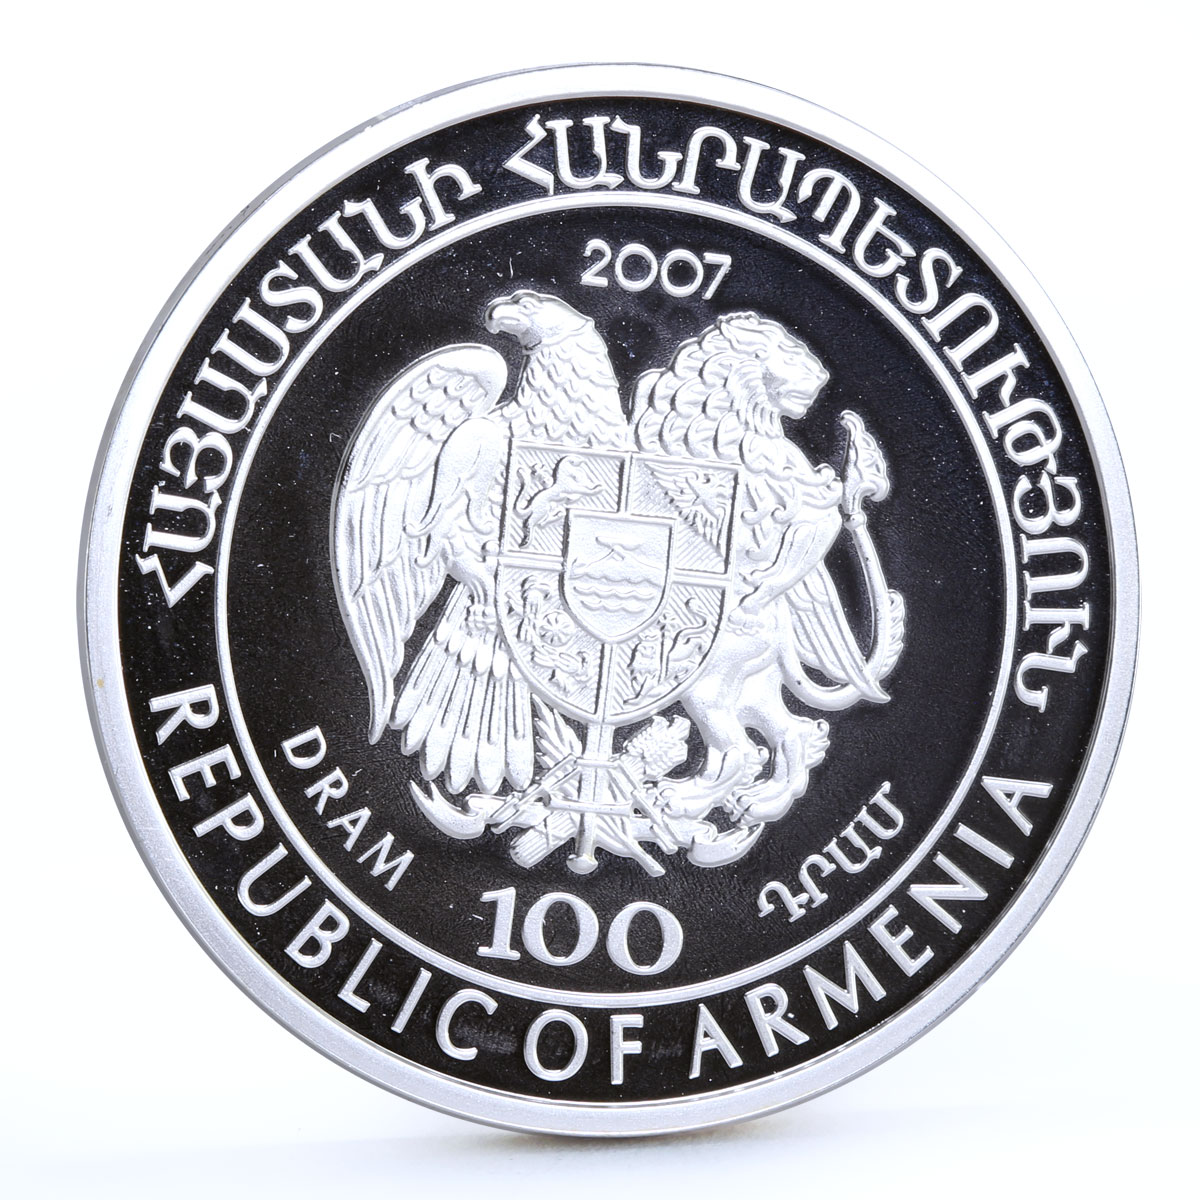 Armenia 100 dram Red Book of Armenia Fauna Viper Snake proof silver coin 2007